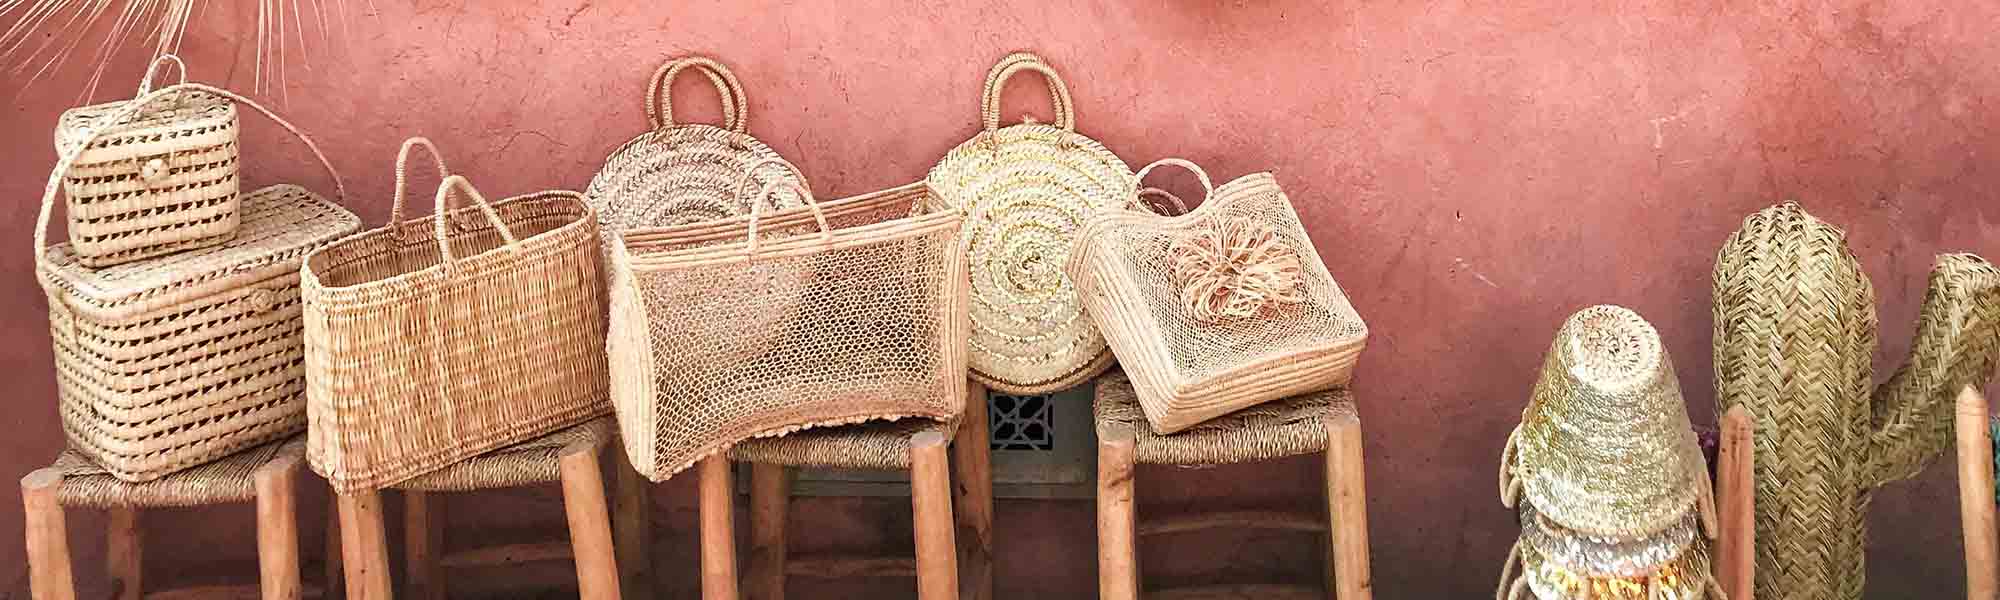 Wonderful wicker baskets on stools against a cobblestone wall